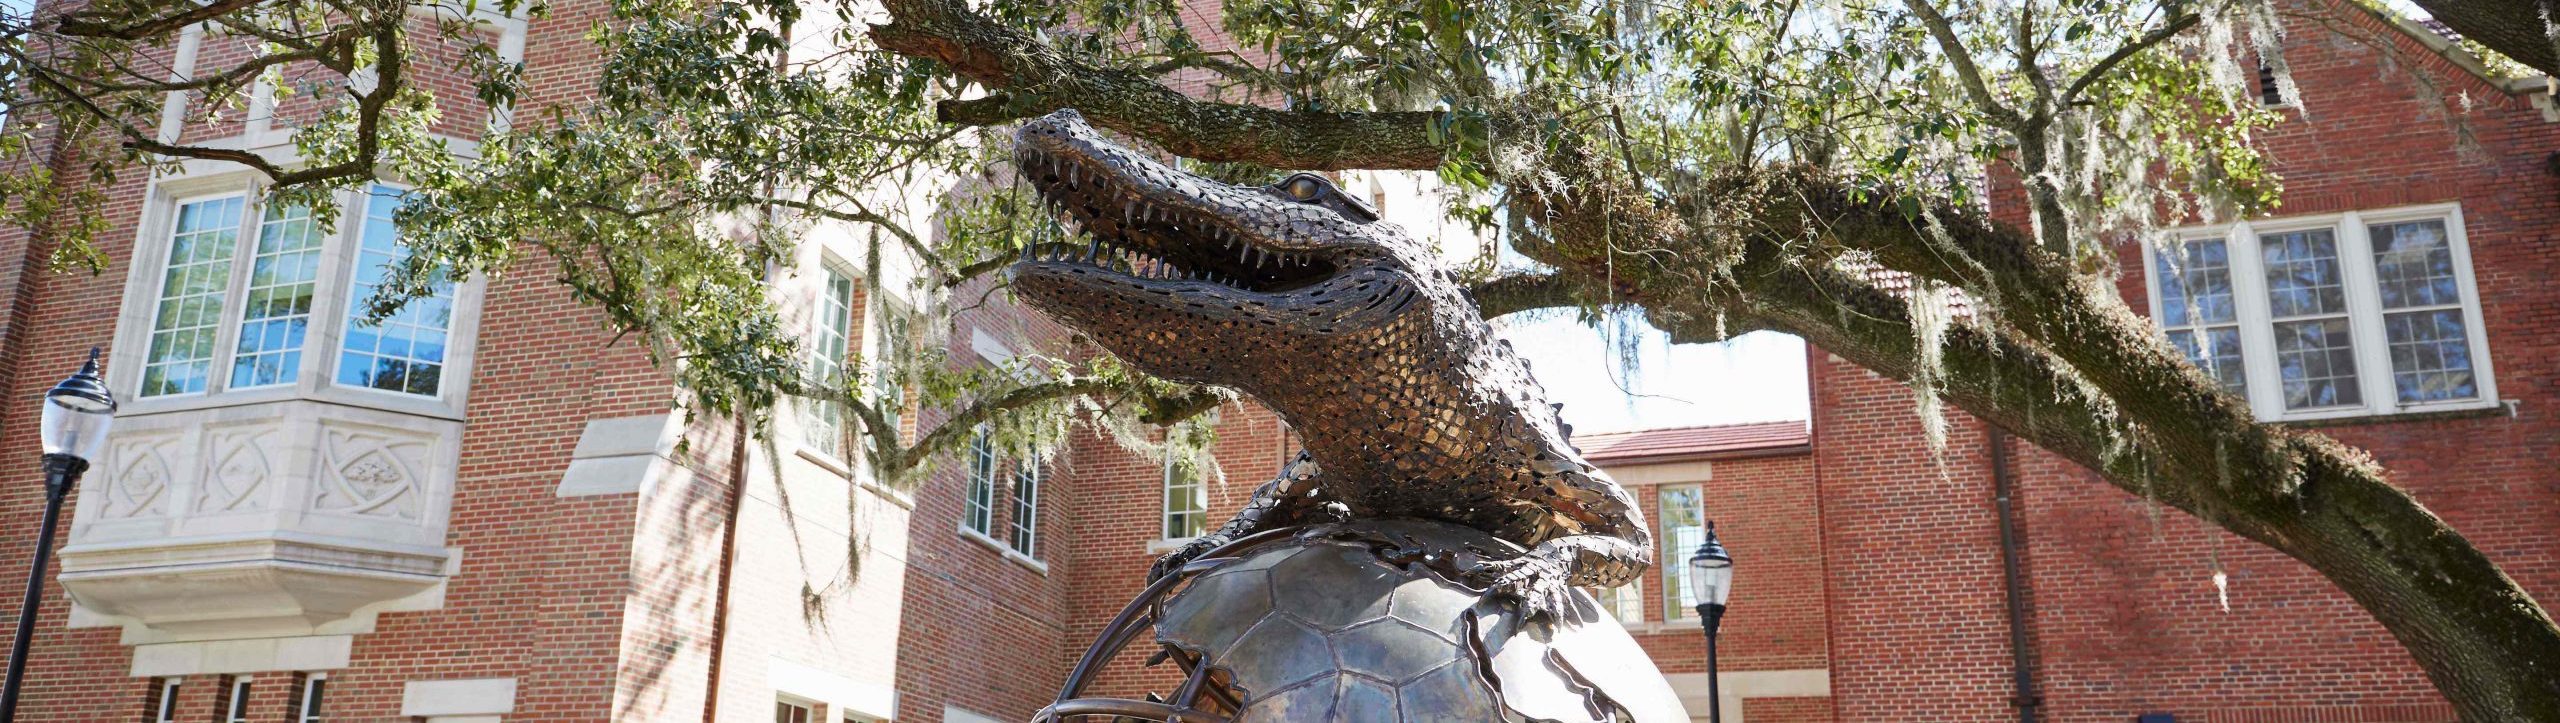 Gator statue on UF campus